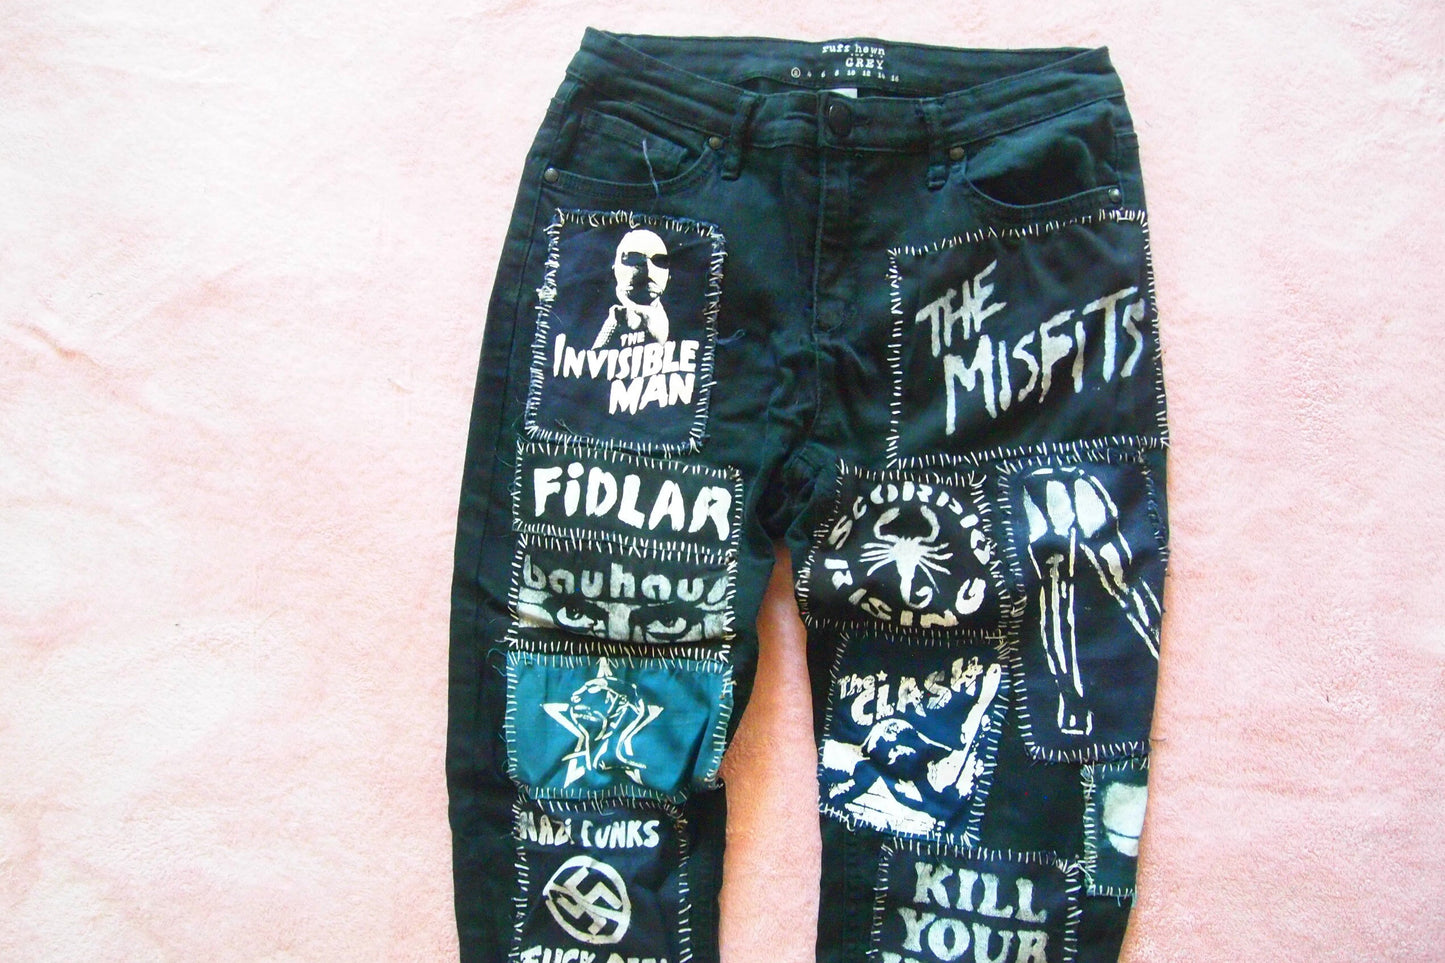 Custom Punk Patched Black Jeans Sz 2 Ruff Hewn Grey the Misfits Bauhaus Goth New Wave Handmade